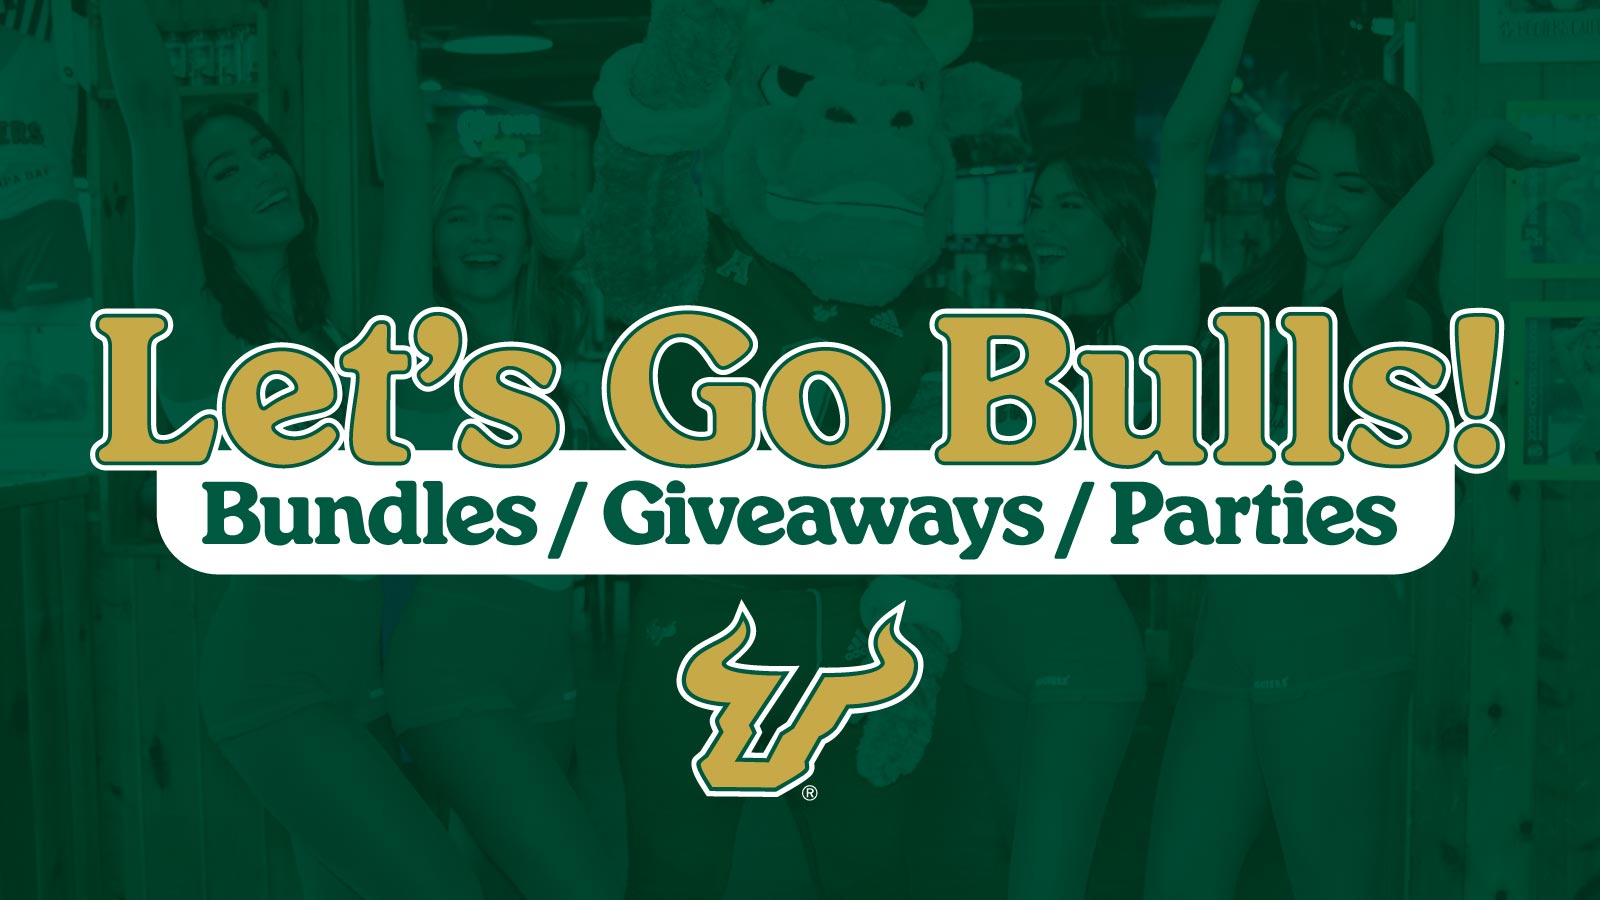 Let's Go Bulls! Bundles / Giveaways / Parties